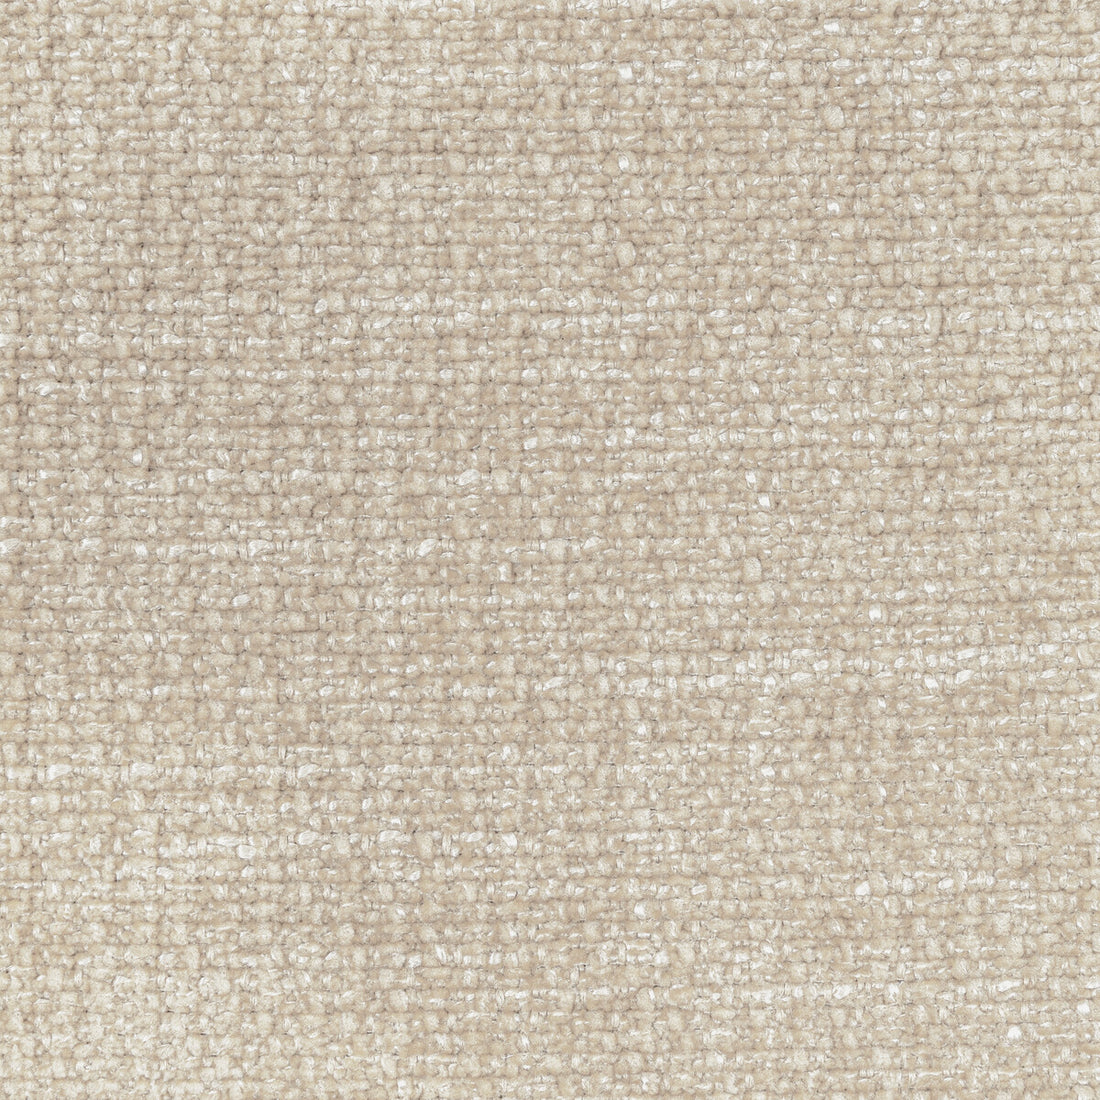 Kravet Smart fabric in 36578-1101 color - pattern 36578.1101.0 - by Kravet Smart in the Performance Kravetarmor collection